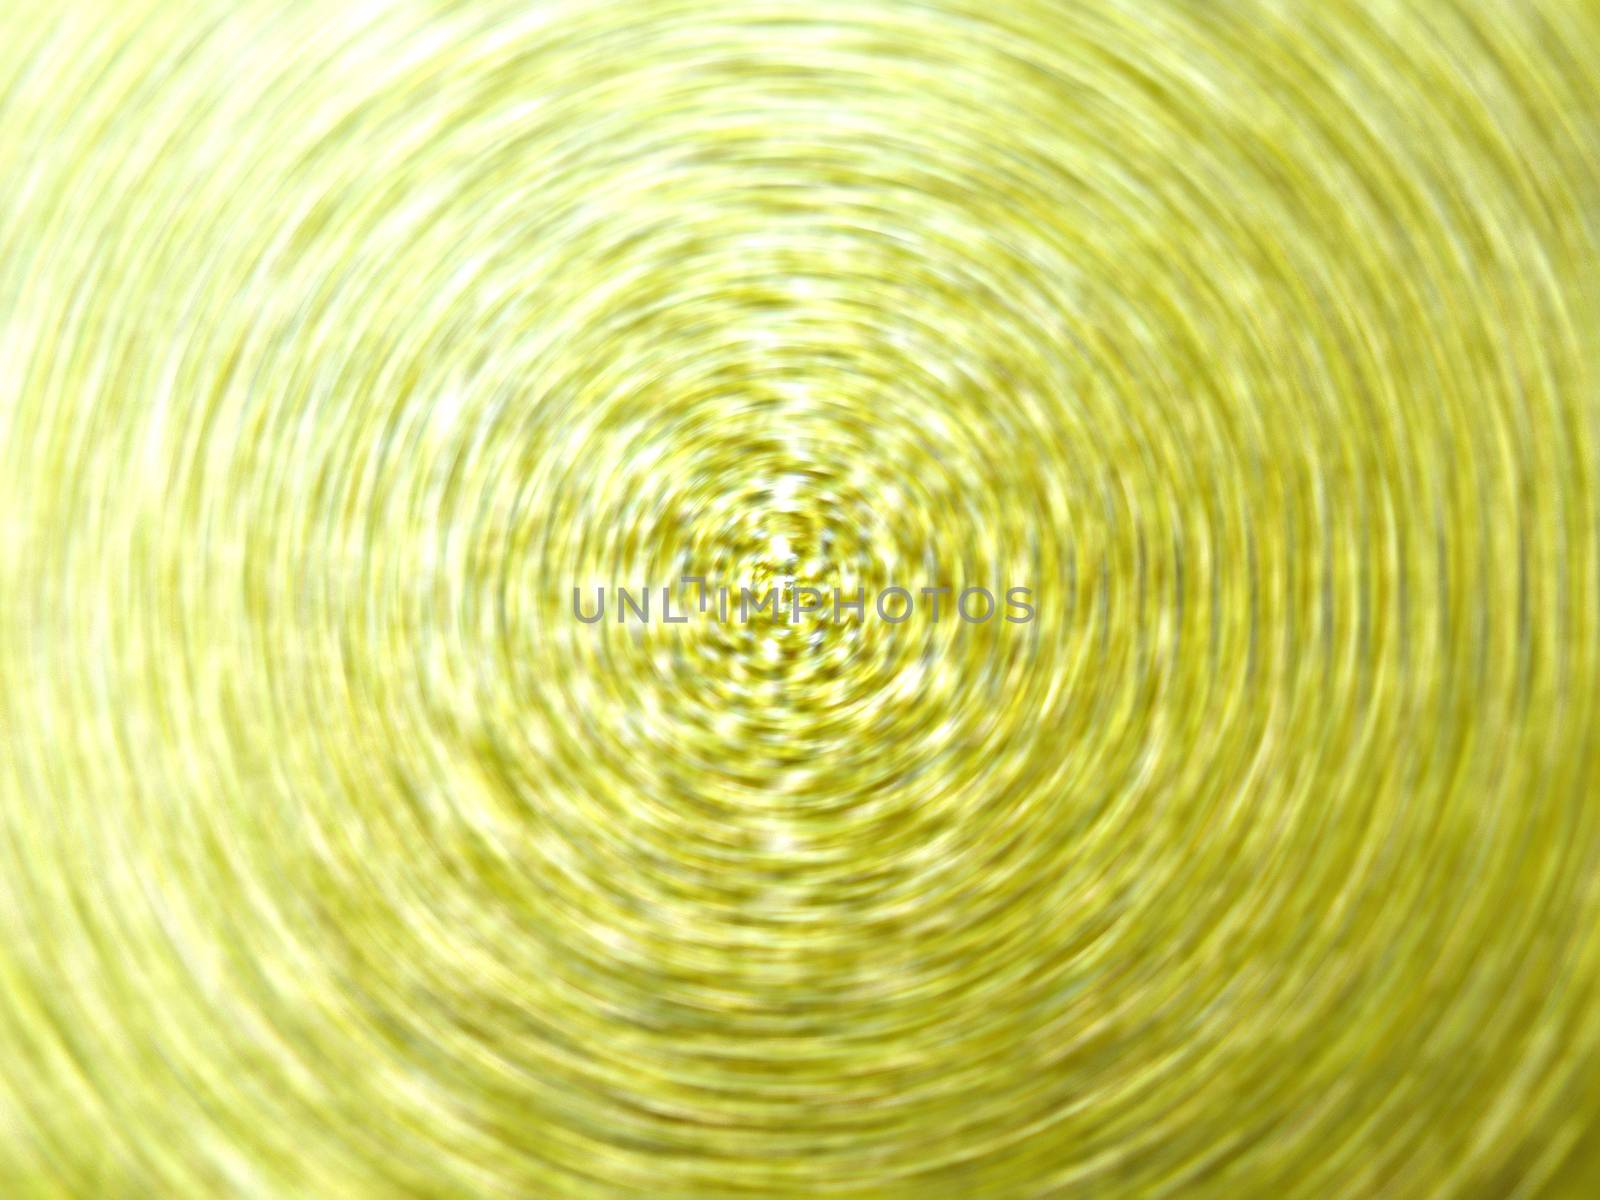 golden vortex background by fadeinphotography